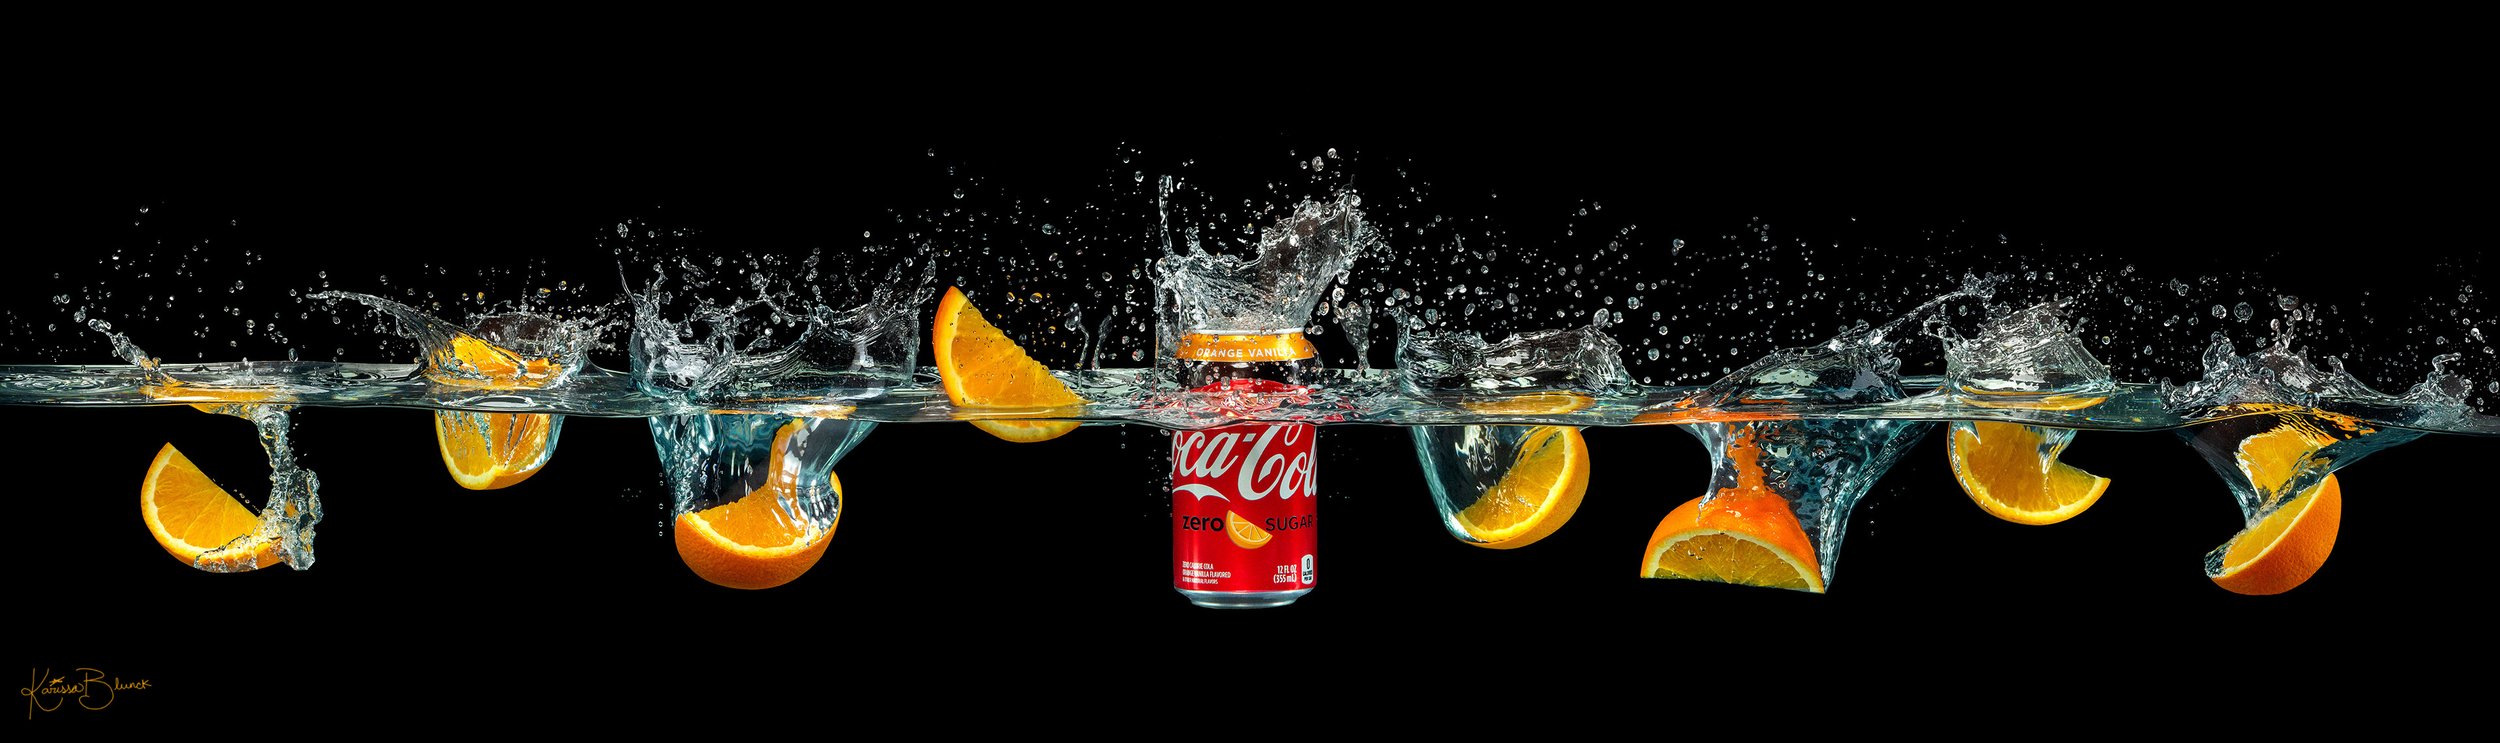 Coca Cola with a Splash of Orange.jpg